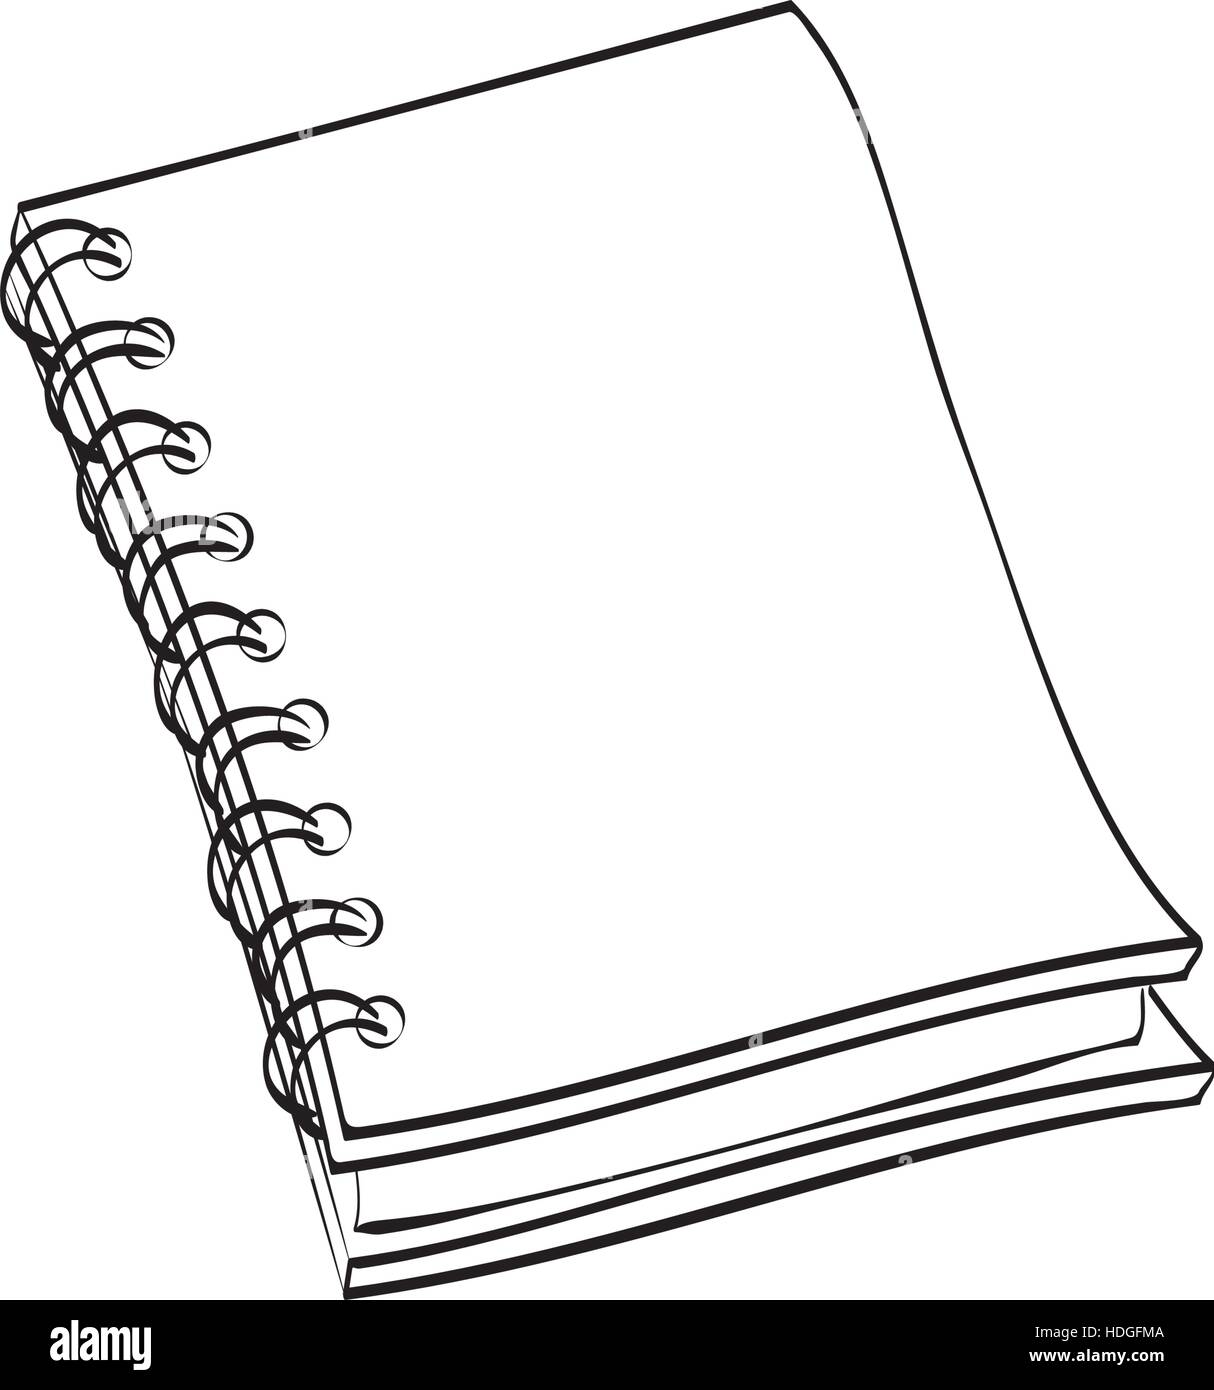 Cuaderno escolar dibujar Imagen Vector de stock - Alamy